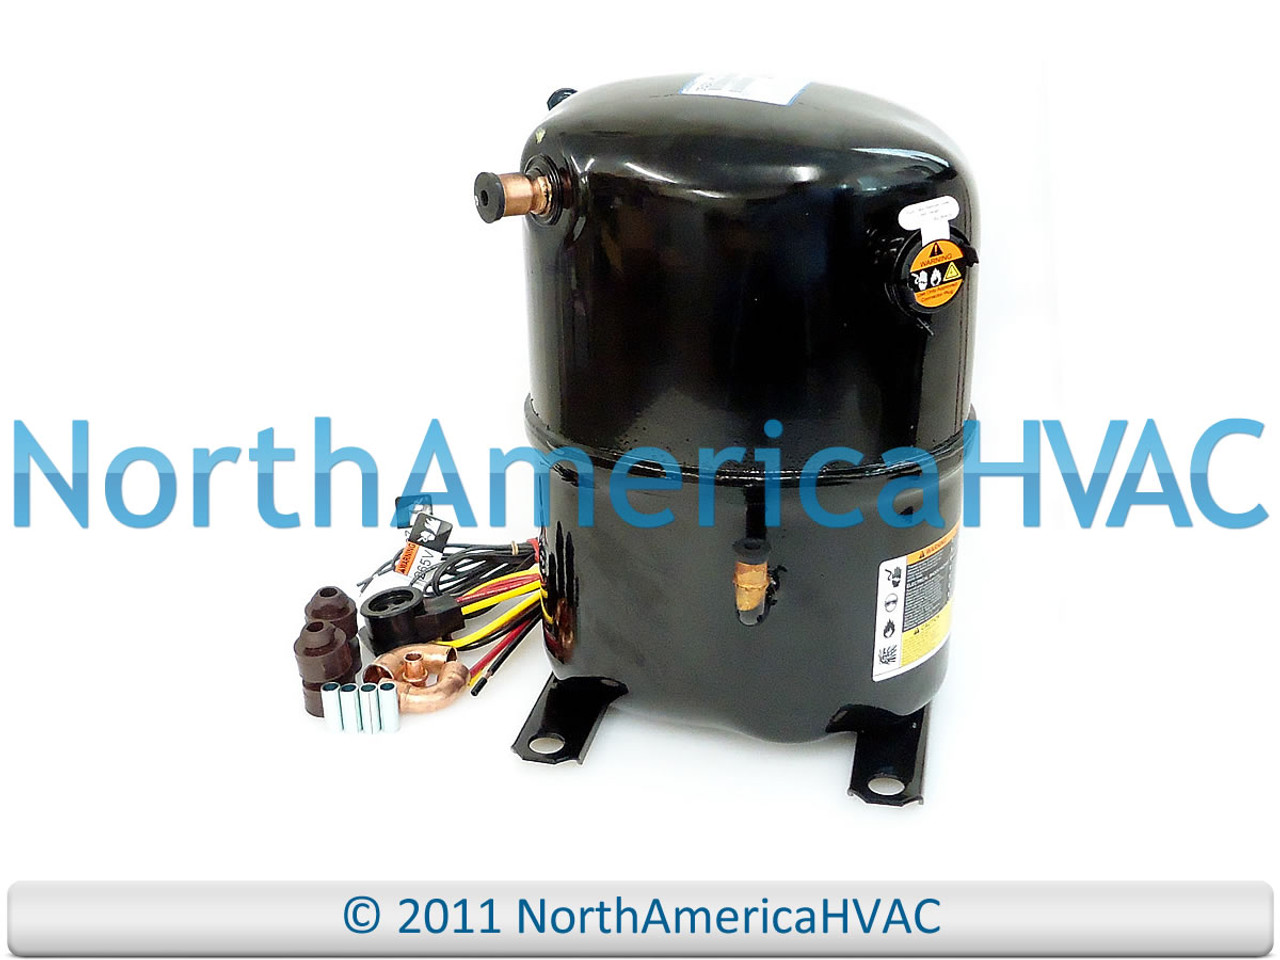 AC Compressor 1.5 Ton 208-230v Fits Rheem Ruud 55-25364-02 55-25332-05S -  North America HVAC